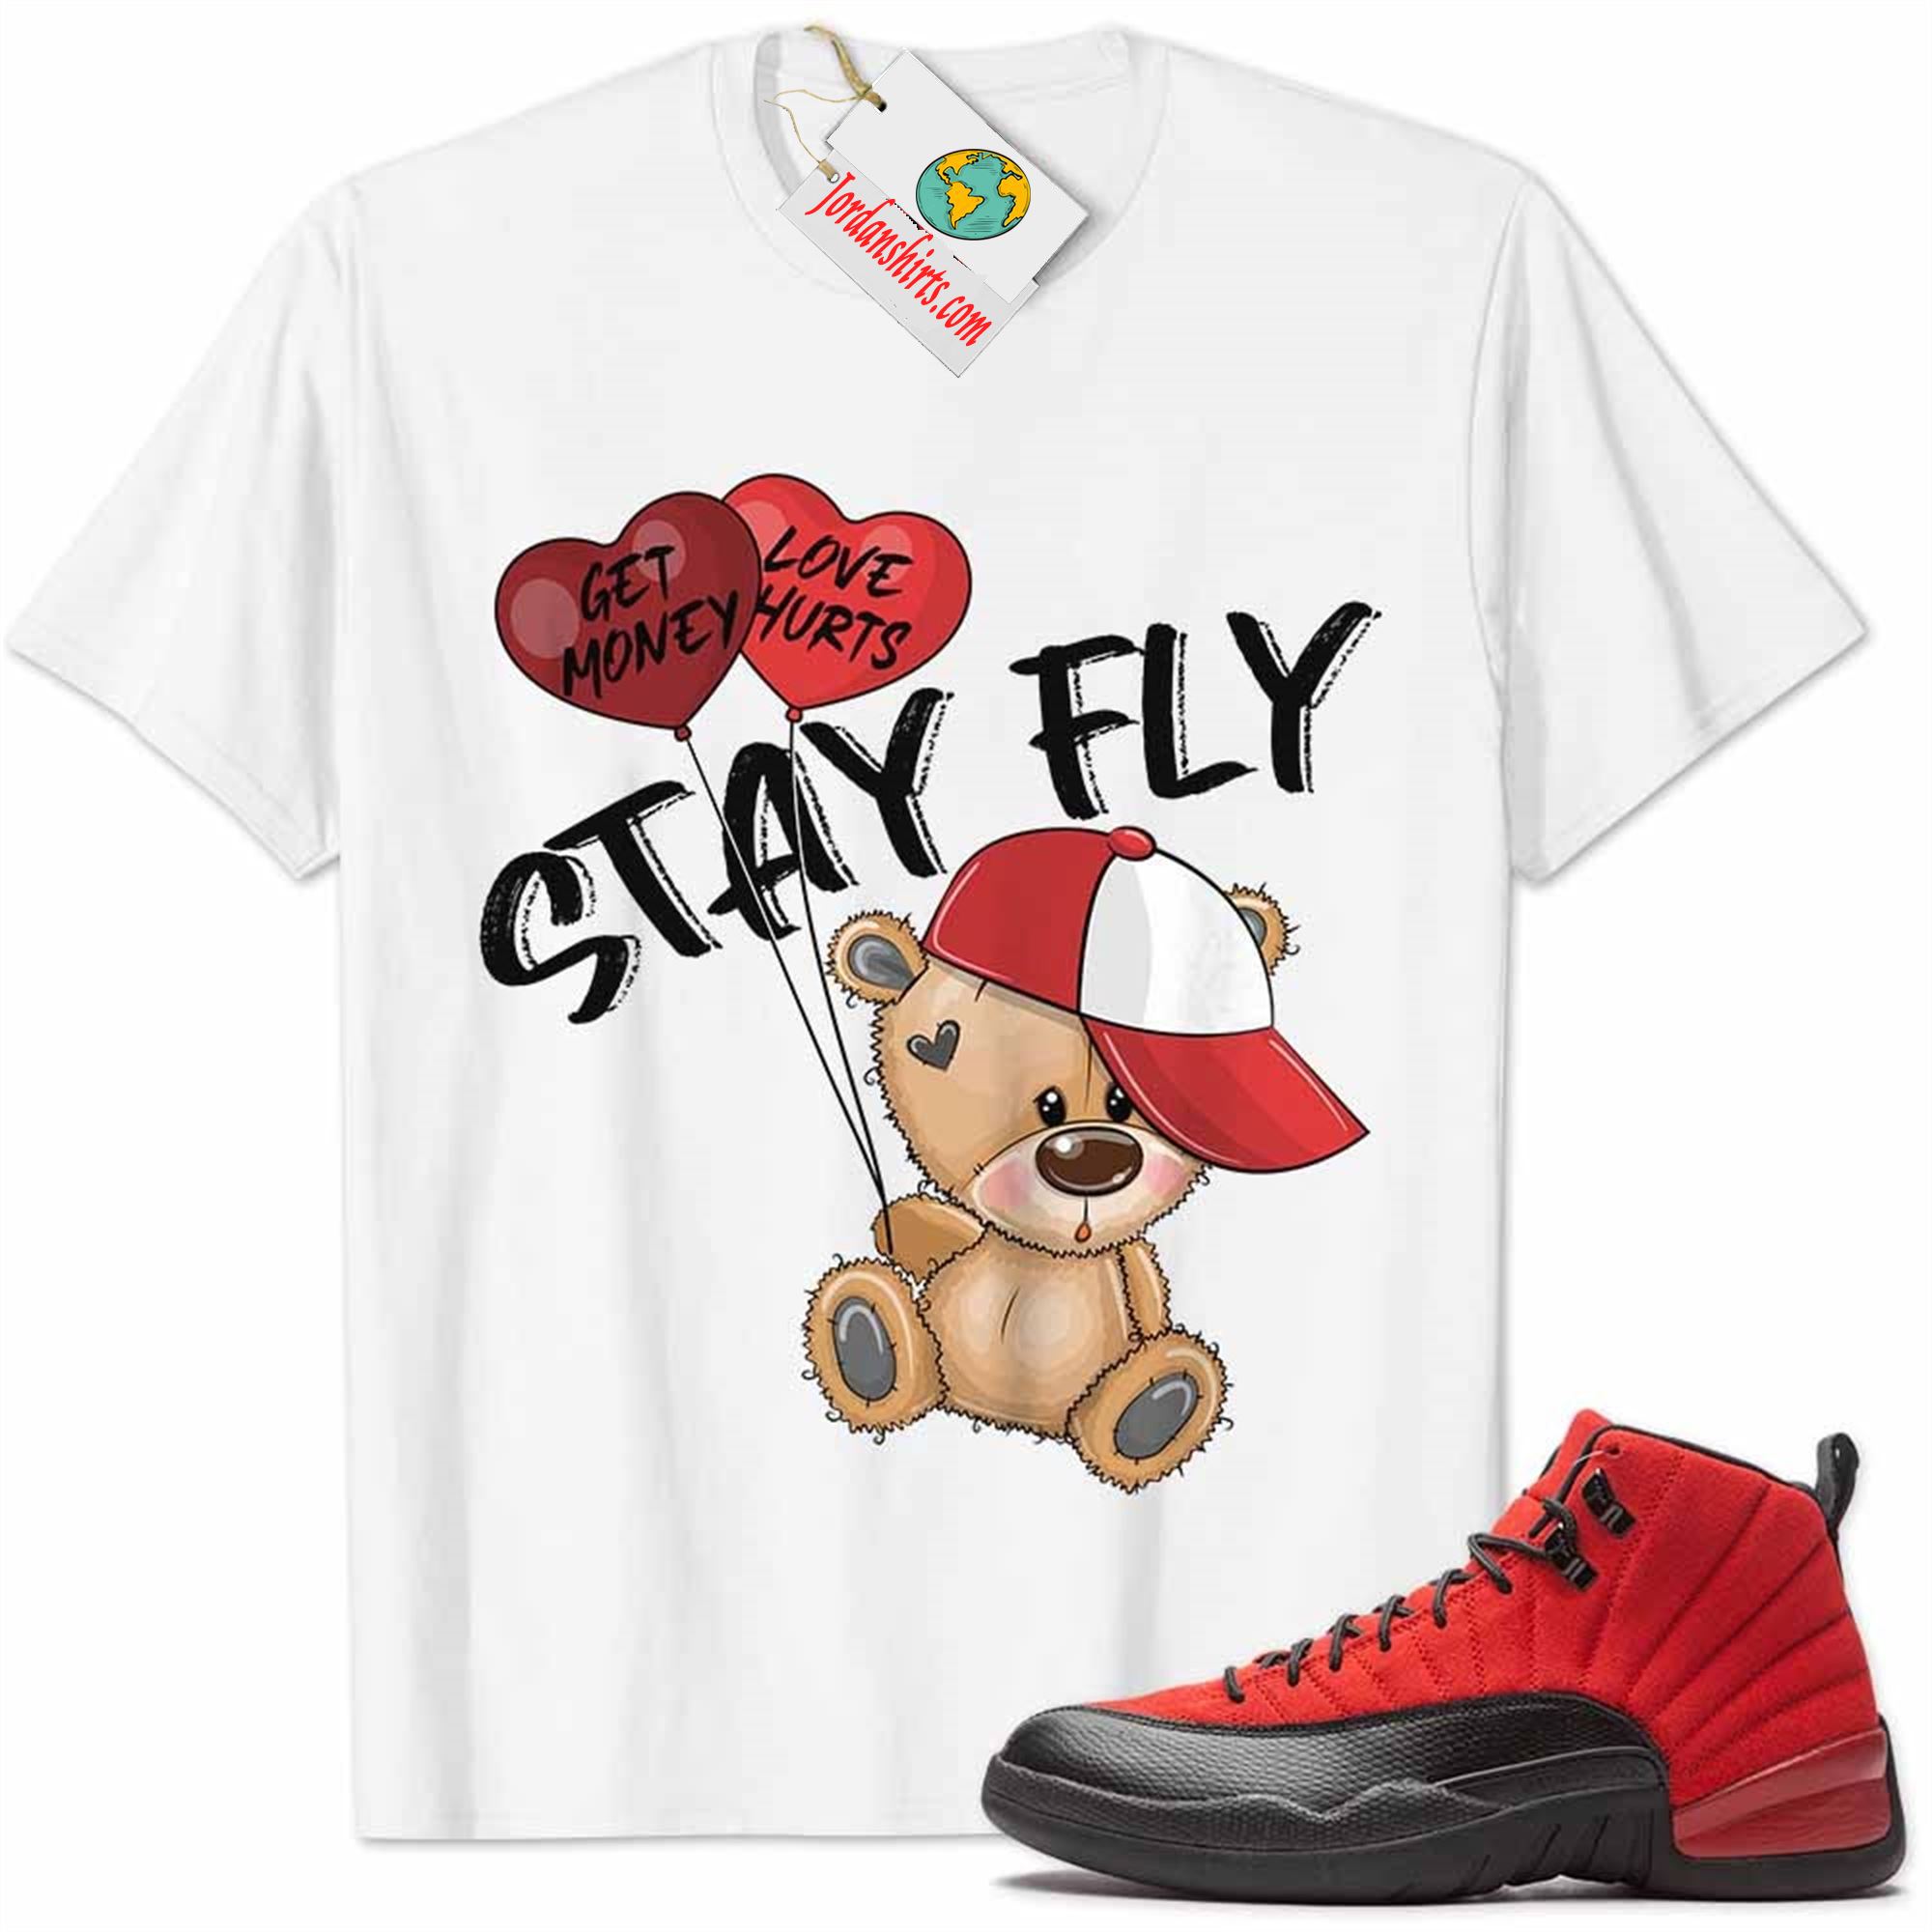 Jordan 12 Shirt, Reverse Flu Game 12s Shirt Cute Teddy Bear Stay Fly Get Money White Full Size Up To 5xl